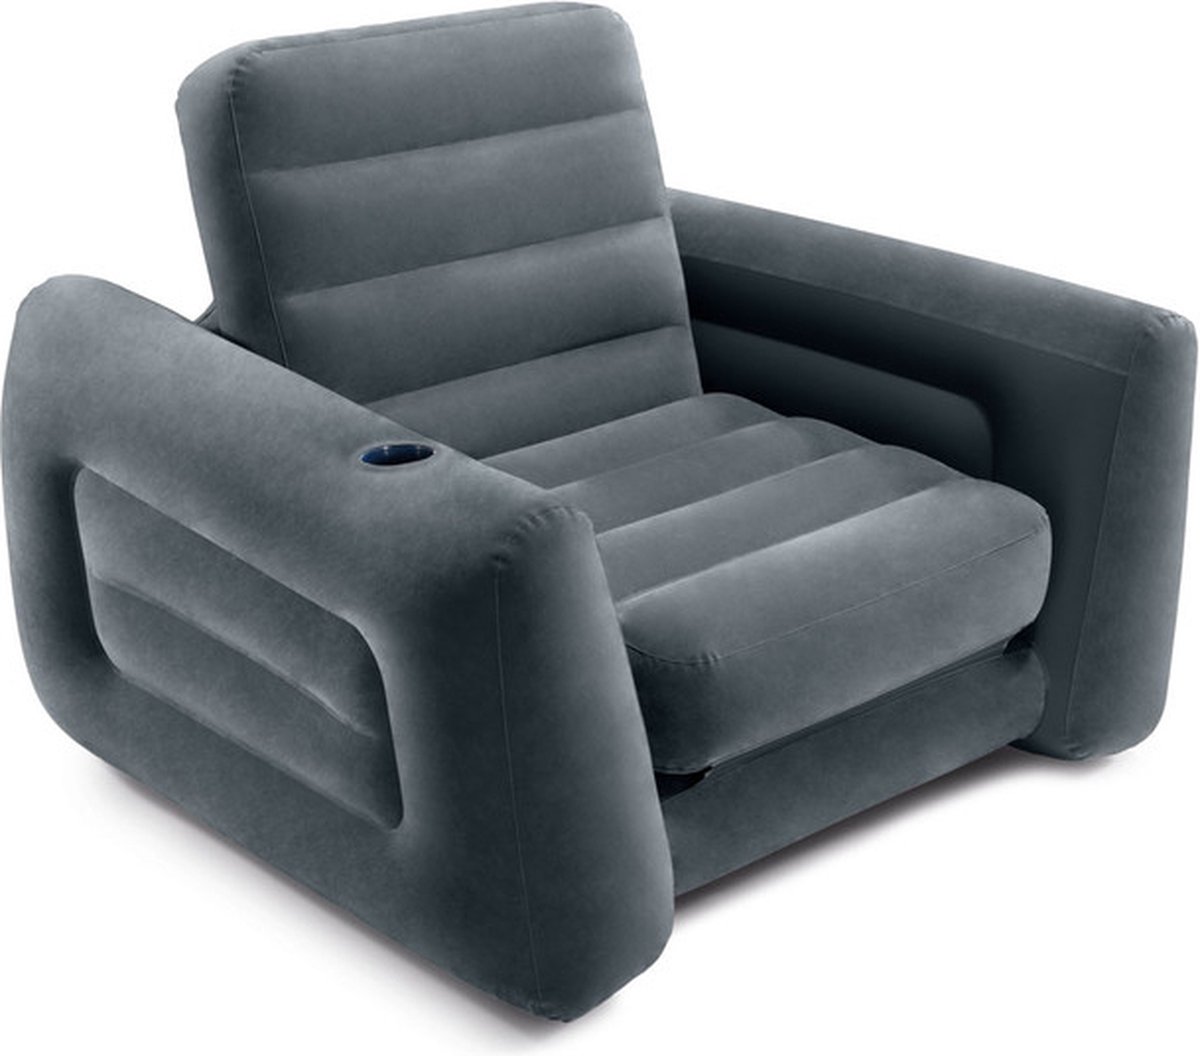 INTEX - opblaasbare stoel - pull-out zetel - sofa - luchtmatras - luchtbed - 117x224x66 cm - luchtbed 1 persoons - opblaasbaar matras - camping matras - comfortabel slapen - multifunctioneel matras - kampeeruitrusting - Intex product